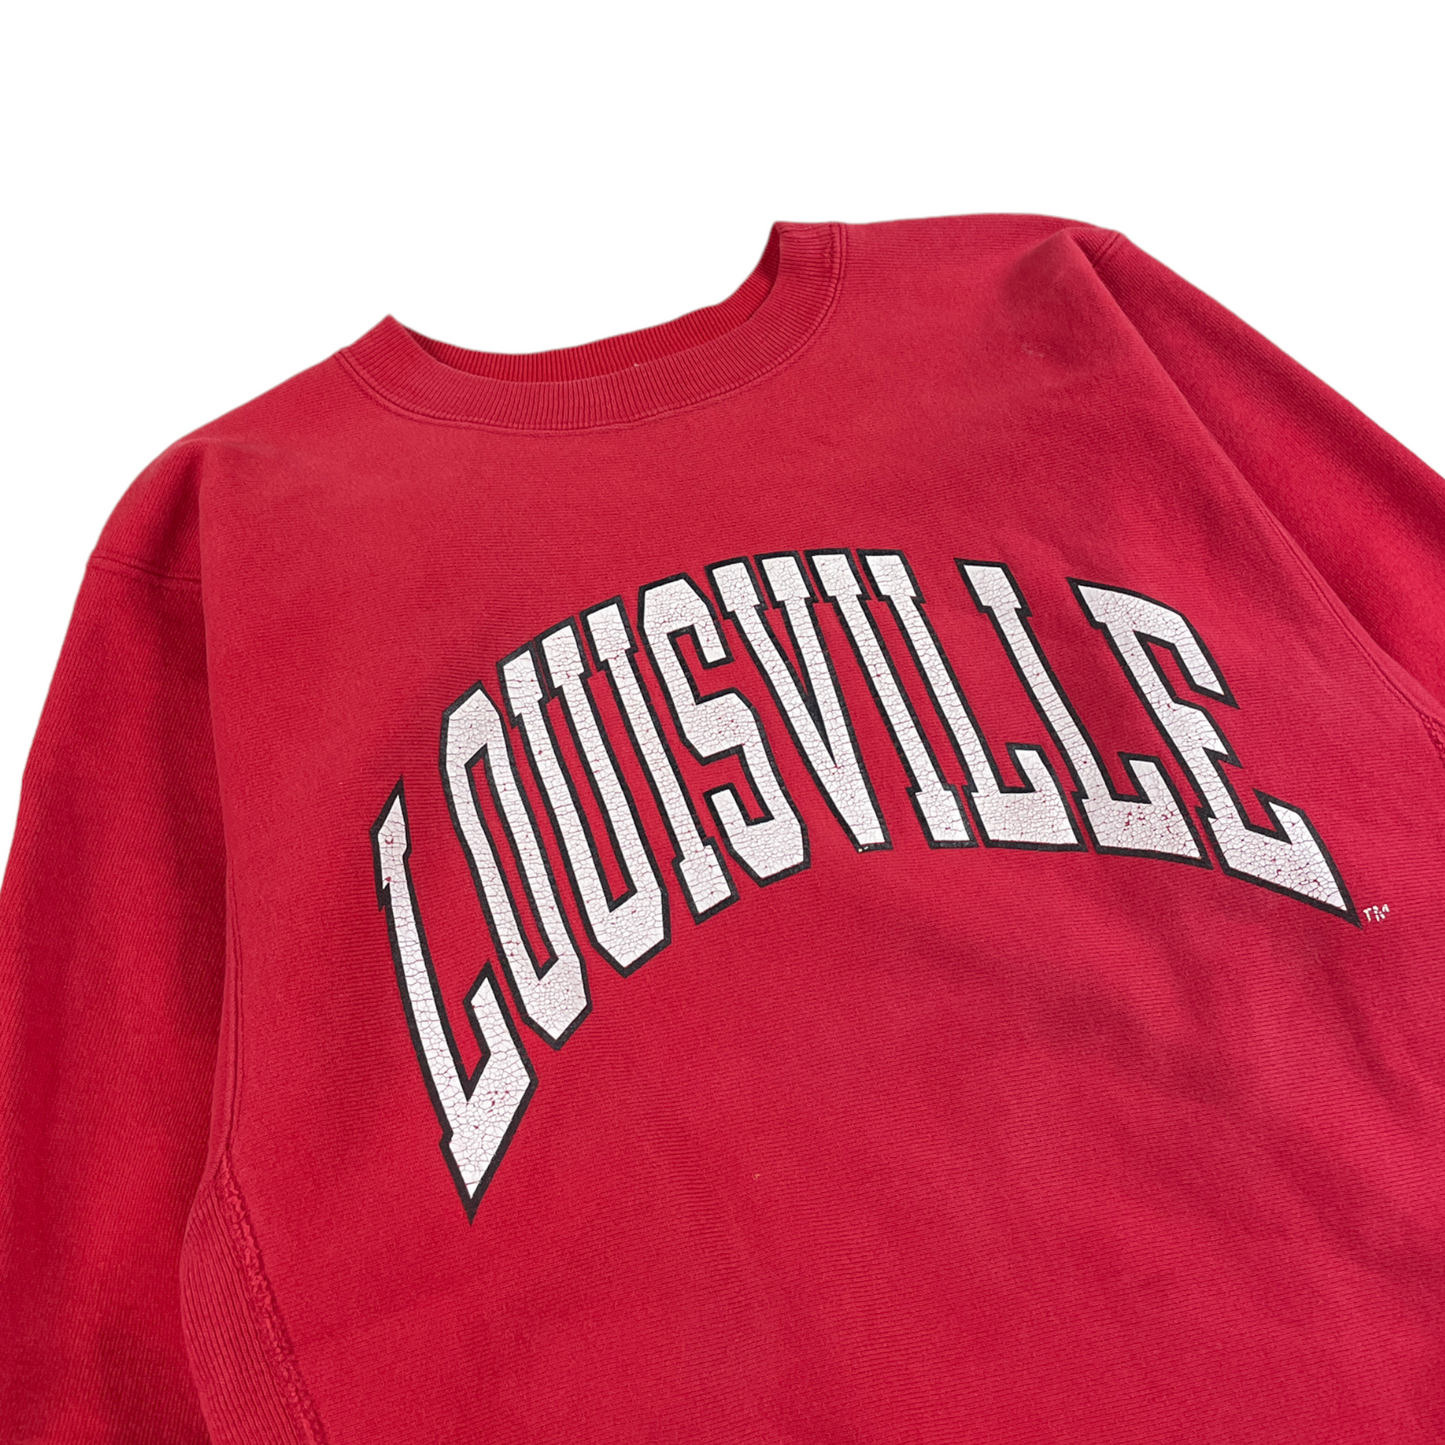 Louisville College Sweatshirt